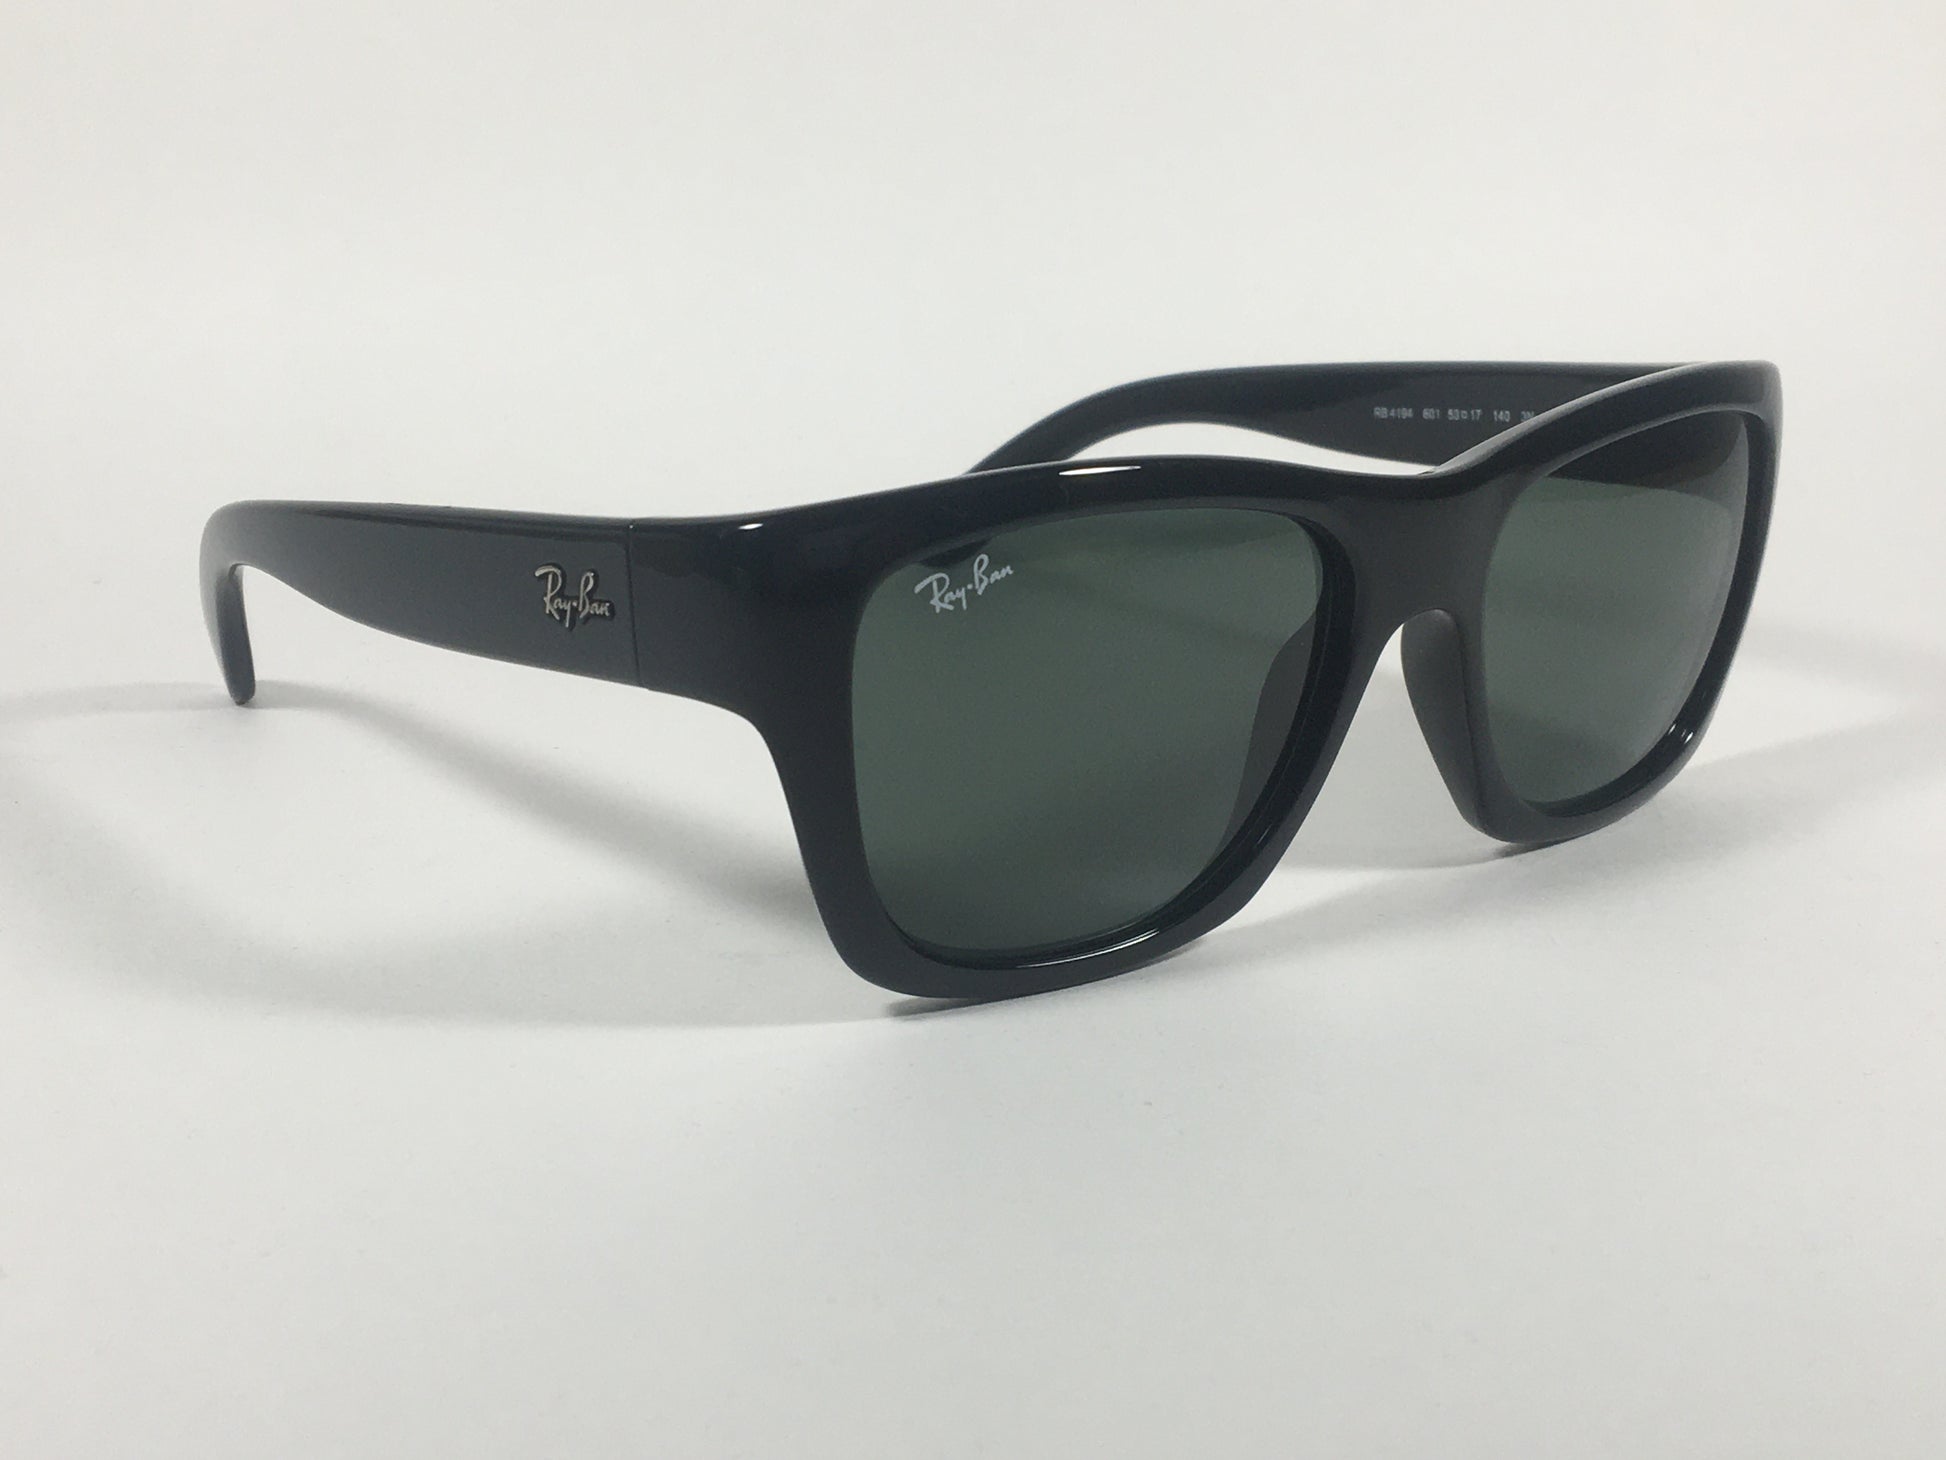 Ray-Ban HighStreet Wayfarer Sunglasses Black Gloss Square Frame Green Lens RB4194 601 - Sunglasses